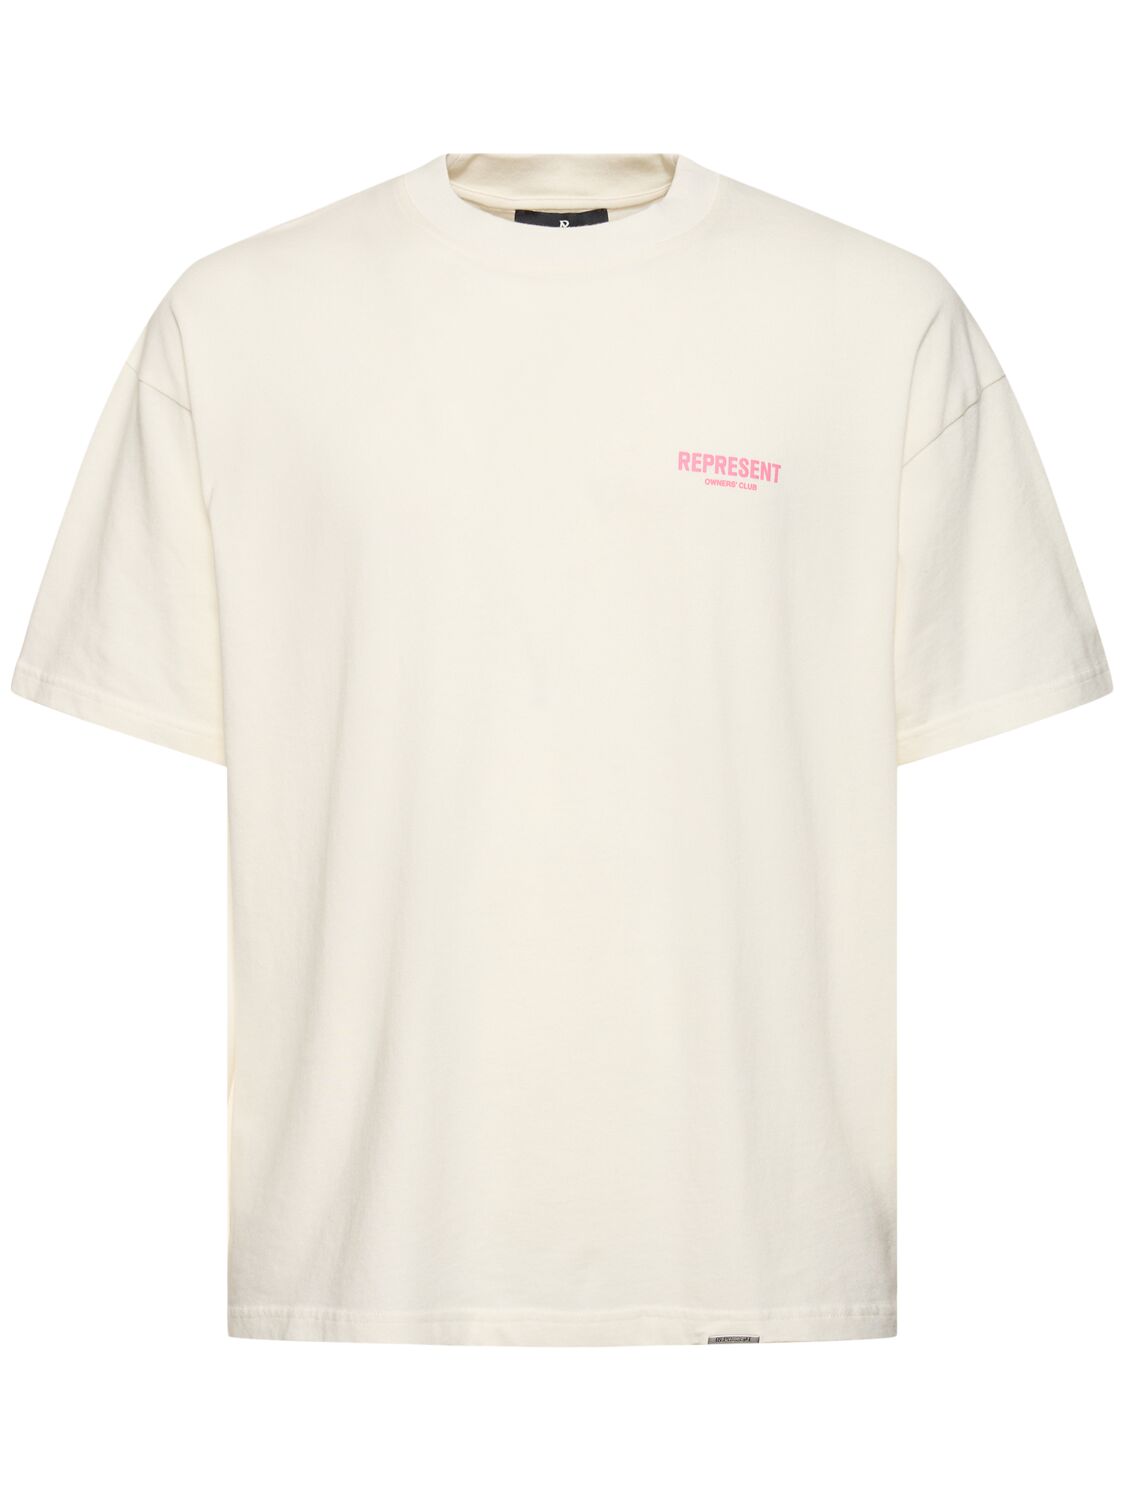 Represent Owners Club Logo Cotton T-shirt In White,bubblegum